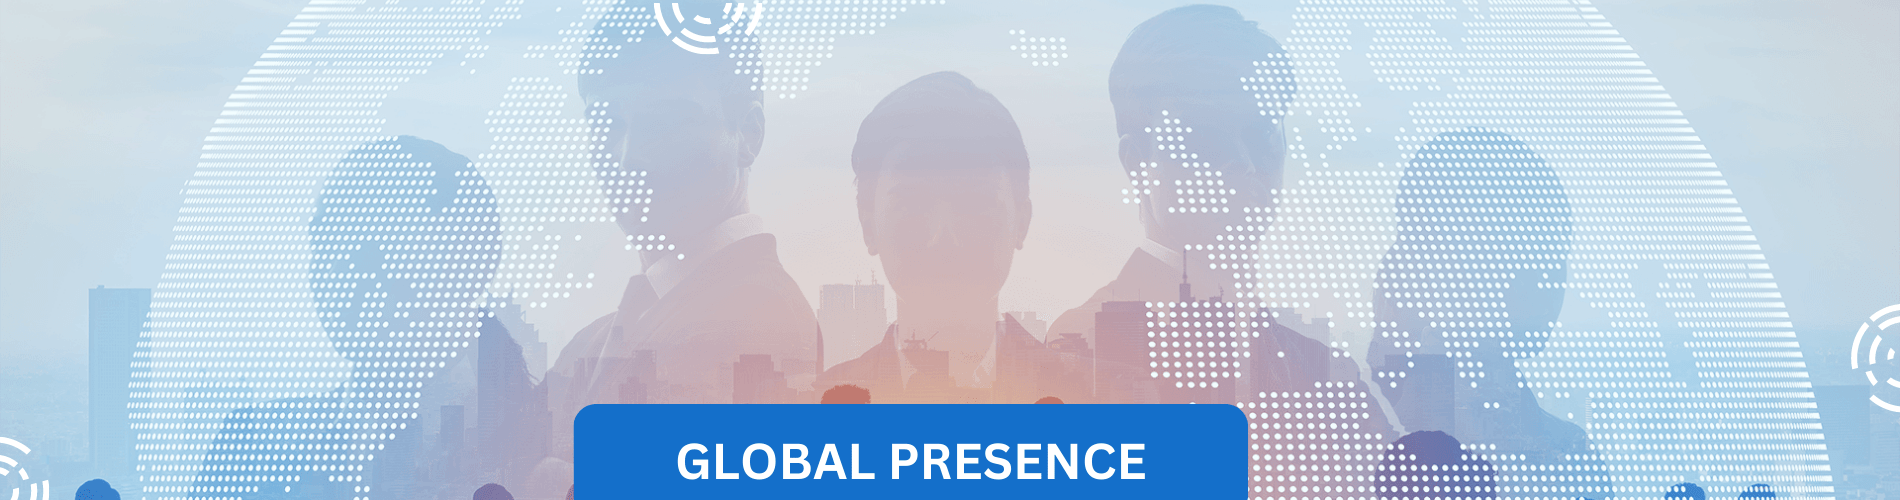 global presence